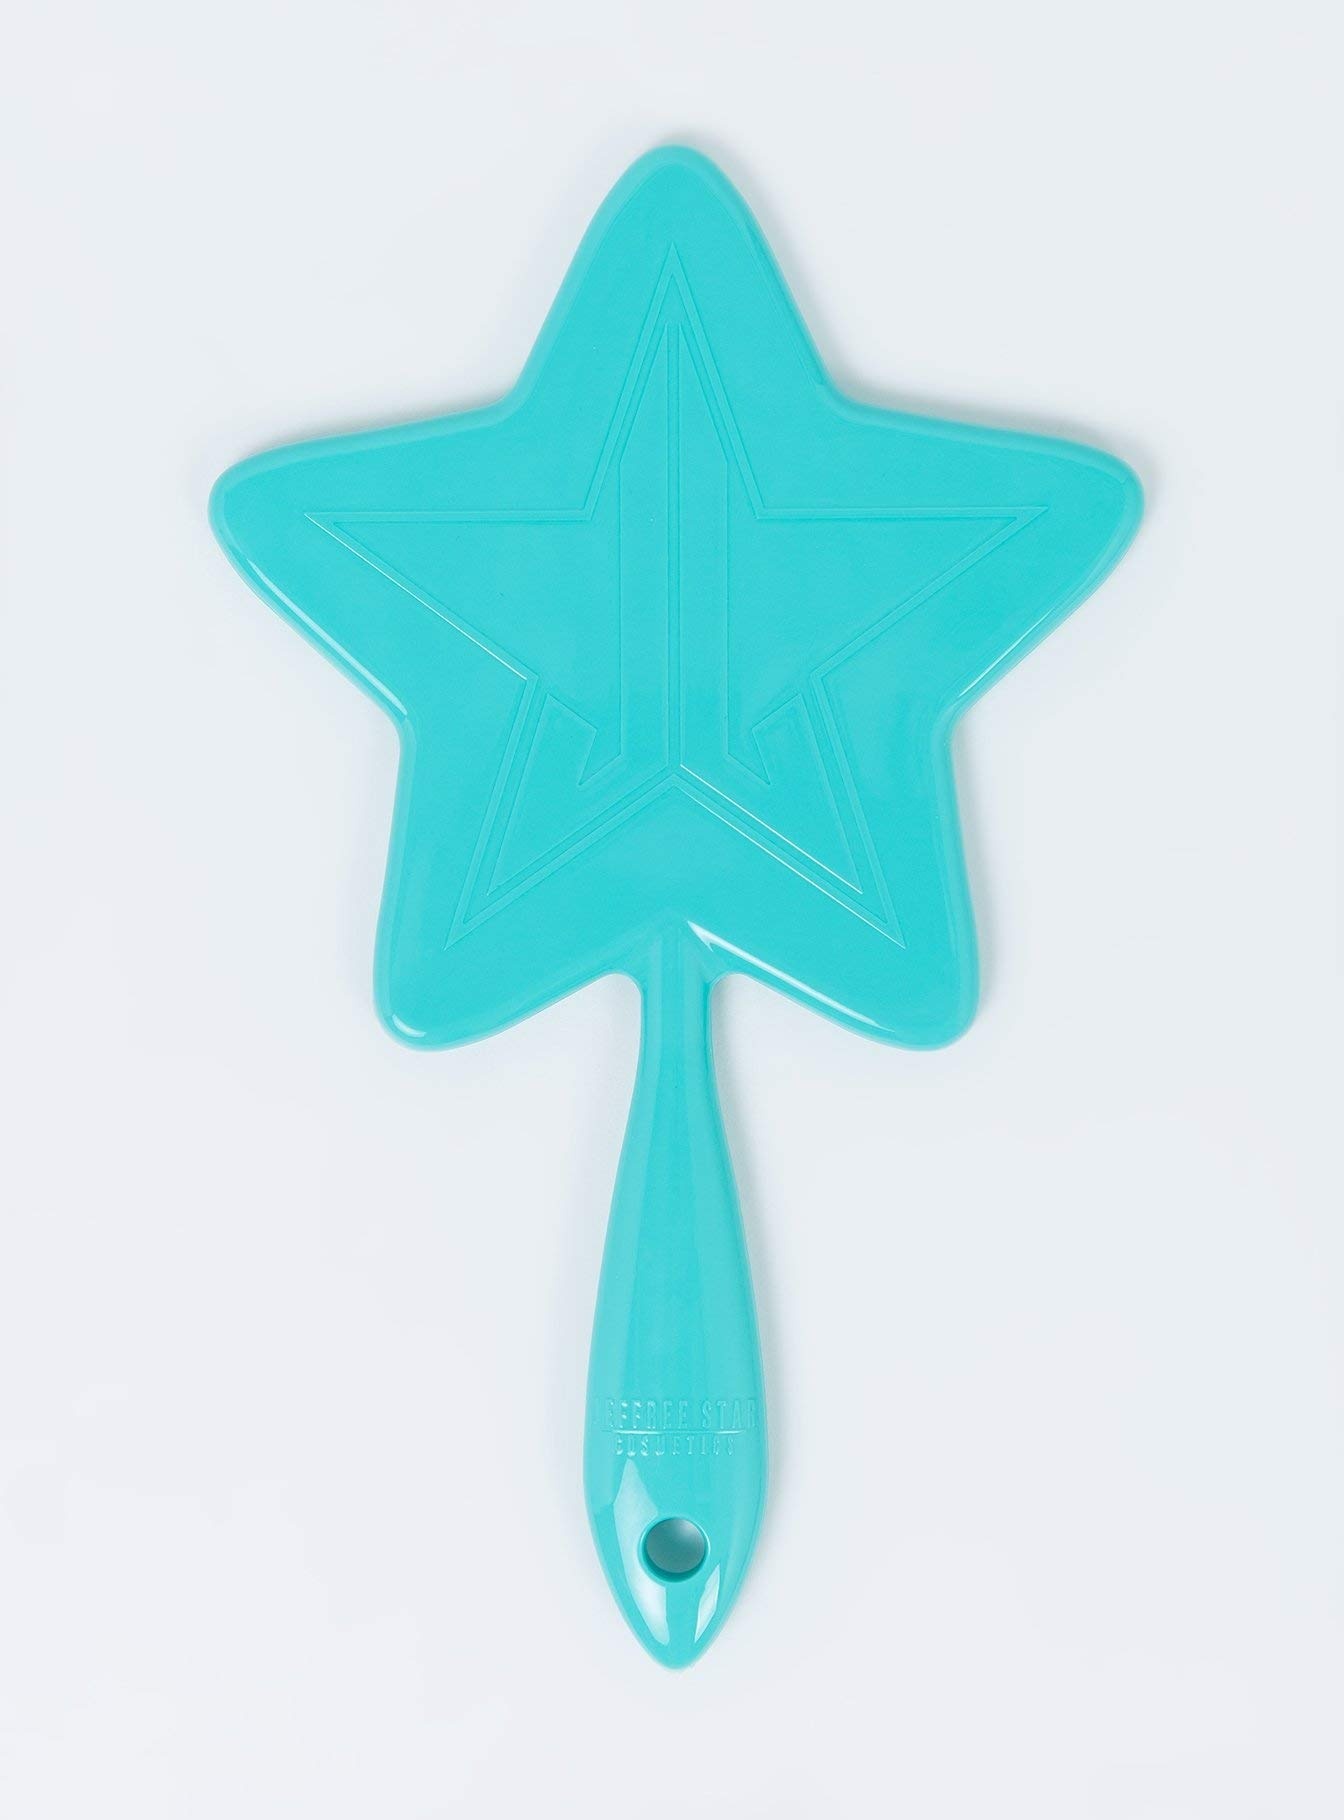 Jeffree Star Hand Mirror Handspiegel Breakfast At Tiffany‘s TÜRKIS NEU Limited Edition